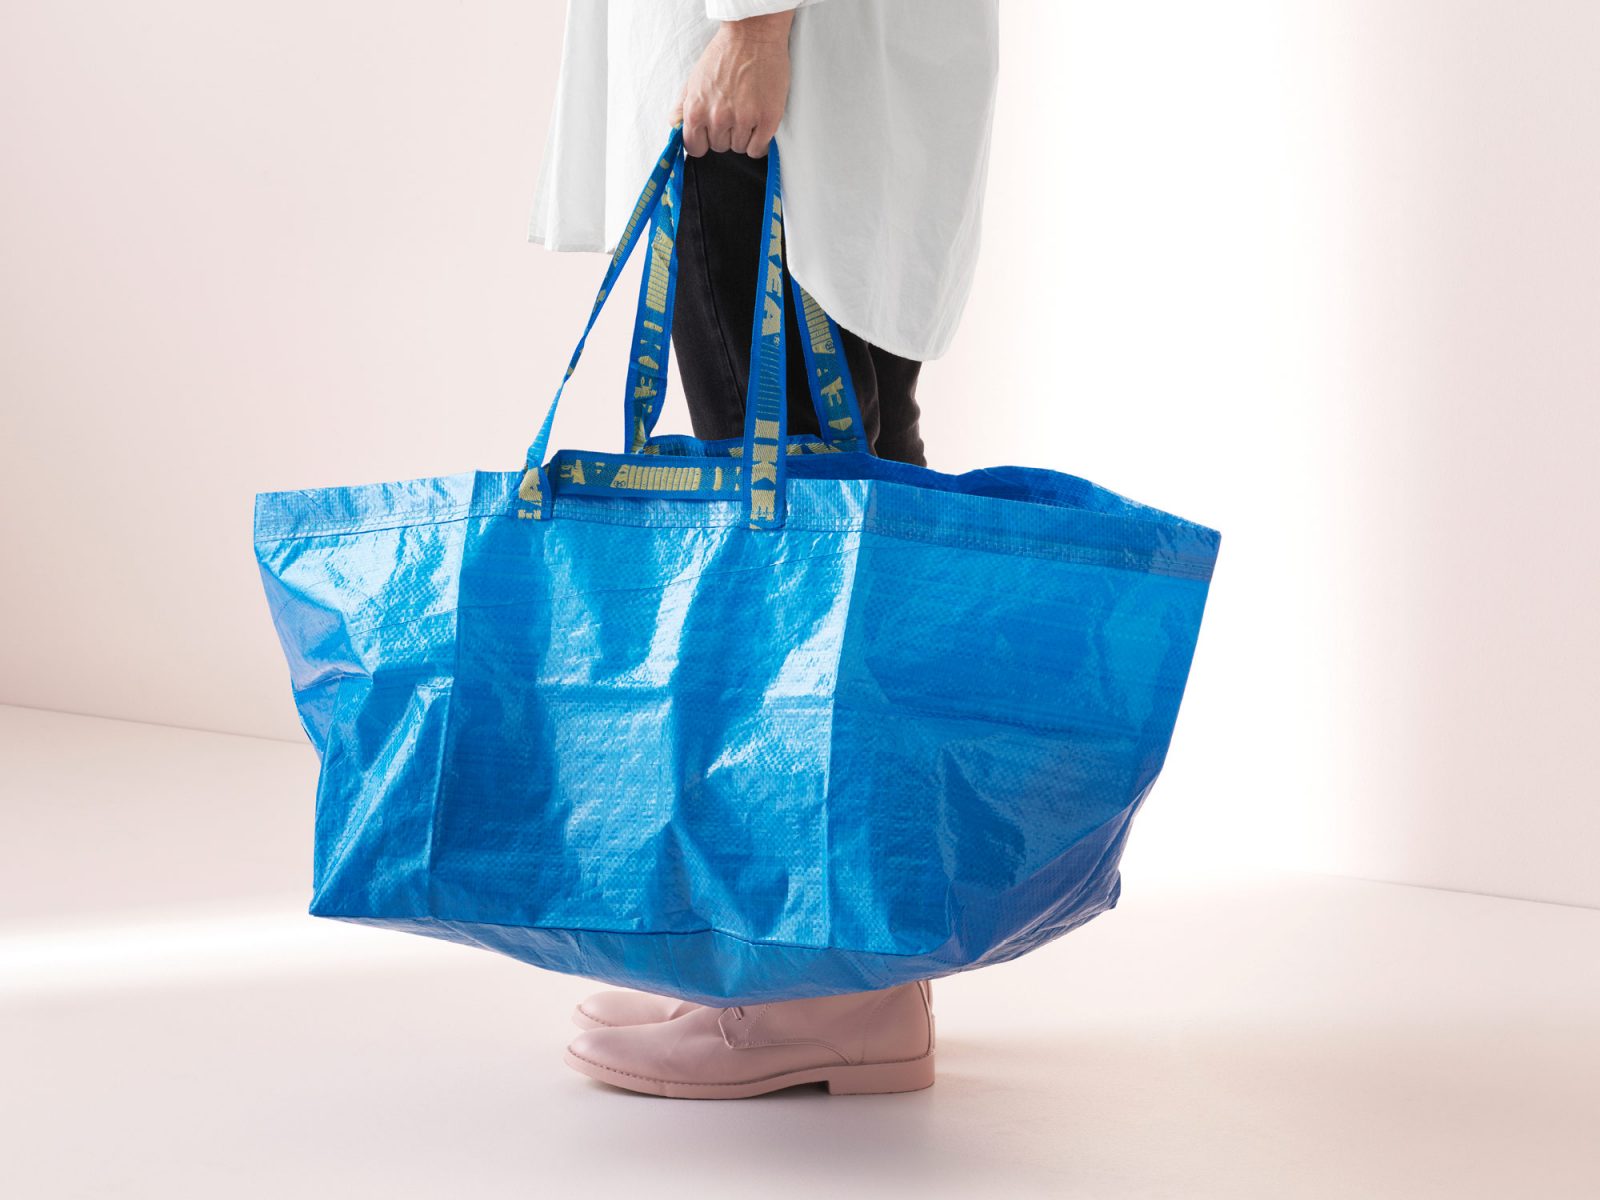 Supermarket IKEA Style Bag for Life